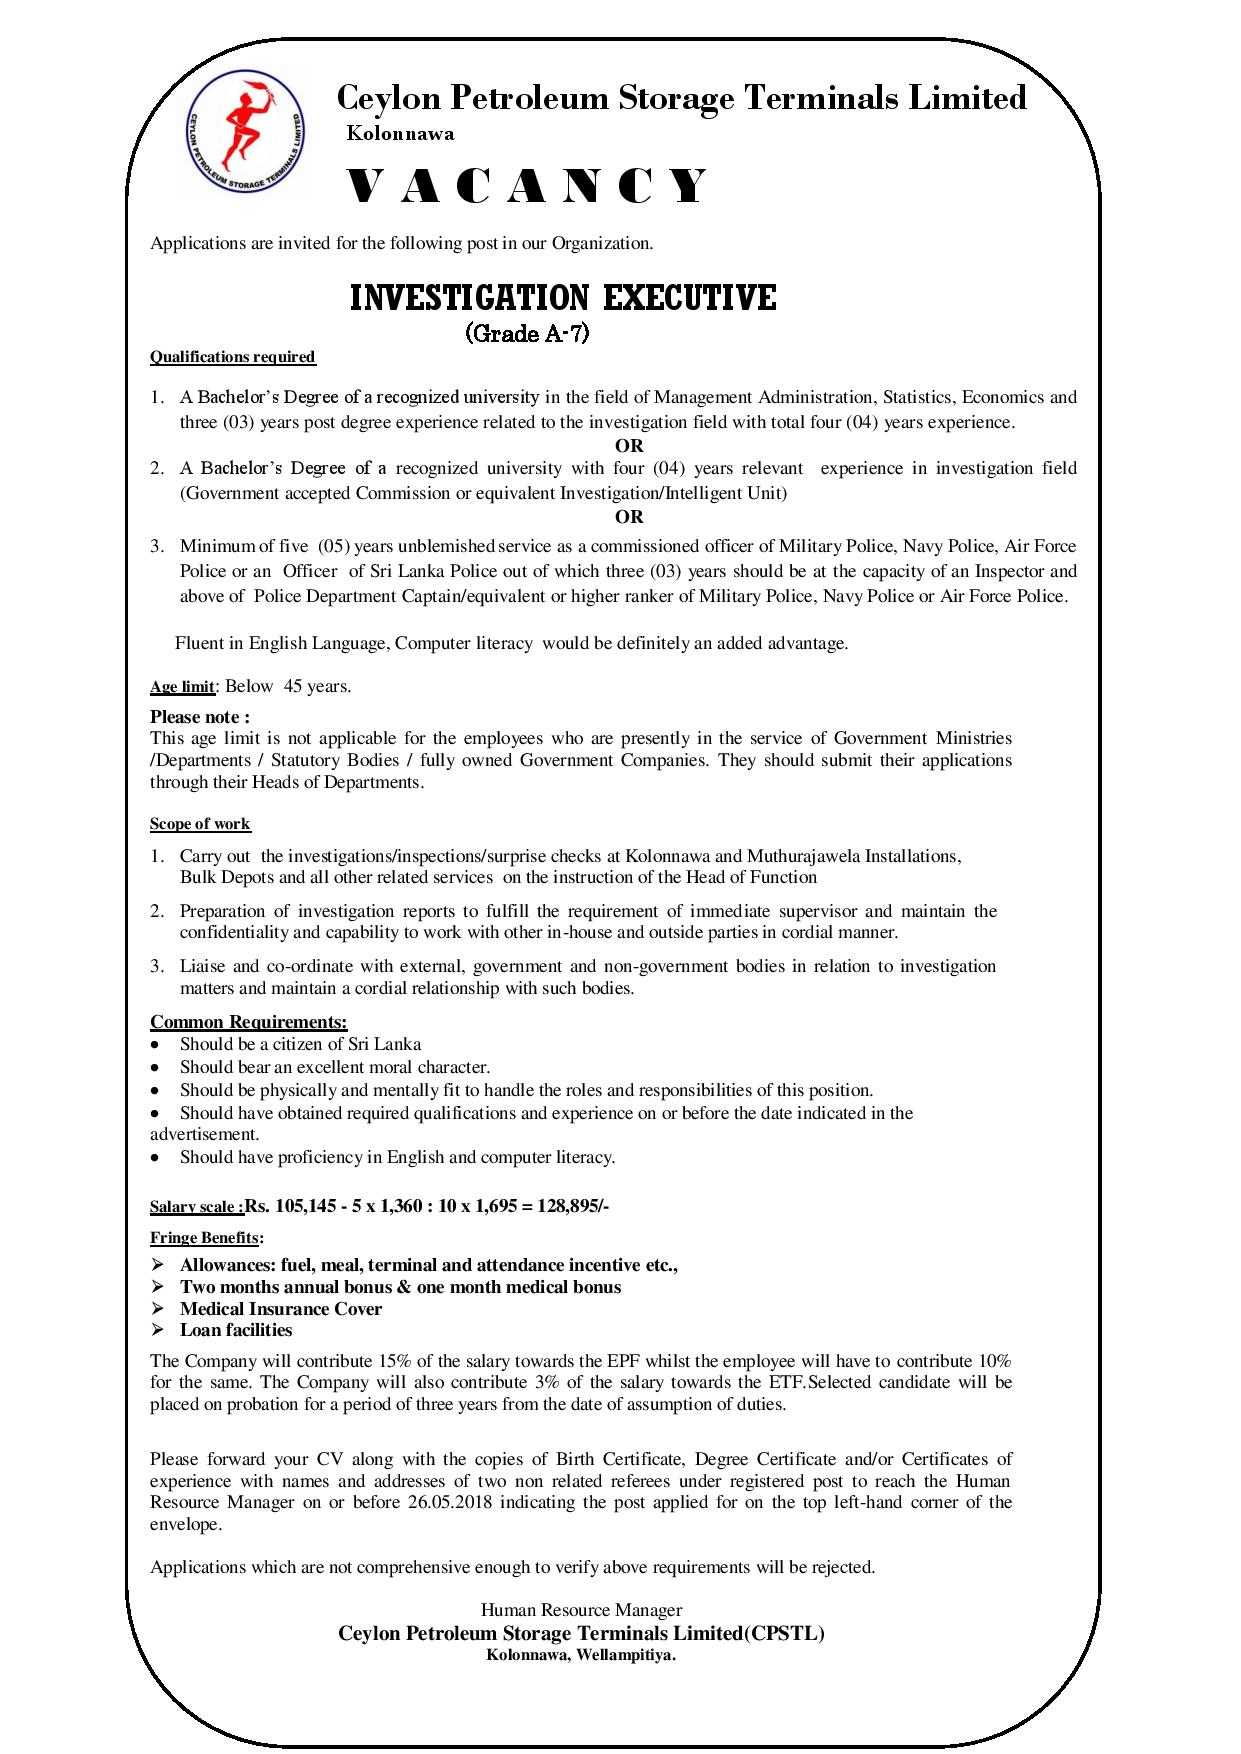 Investigation Executive - Ceylon Petroleum Storage Terminals Ltd